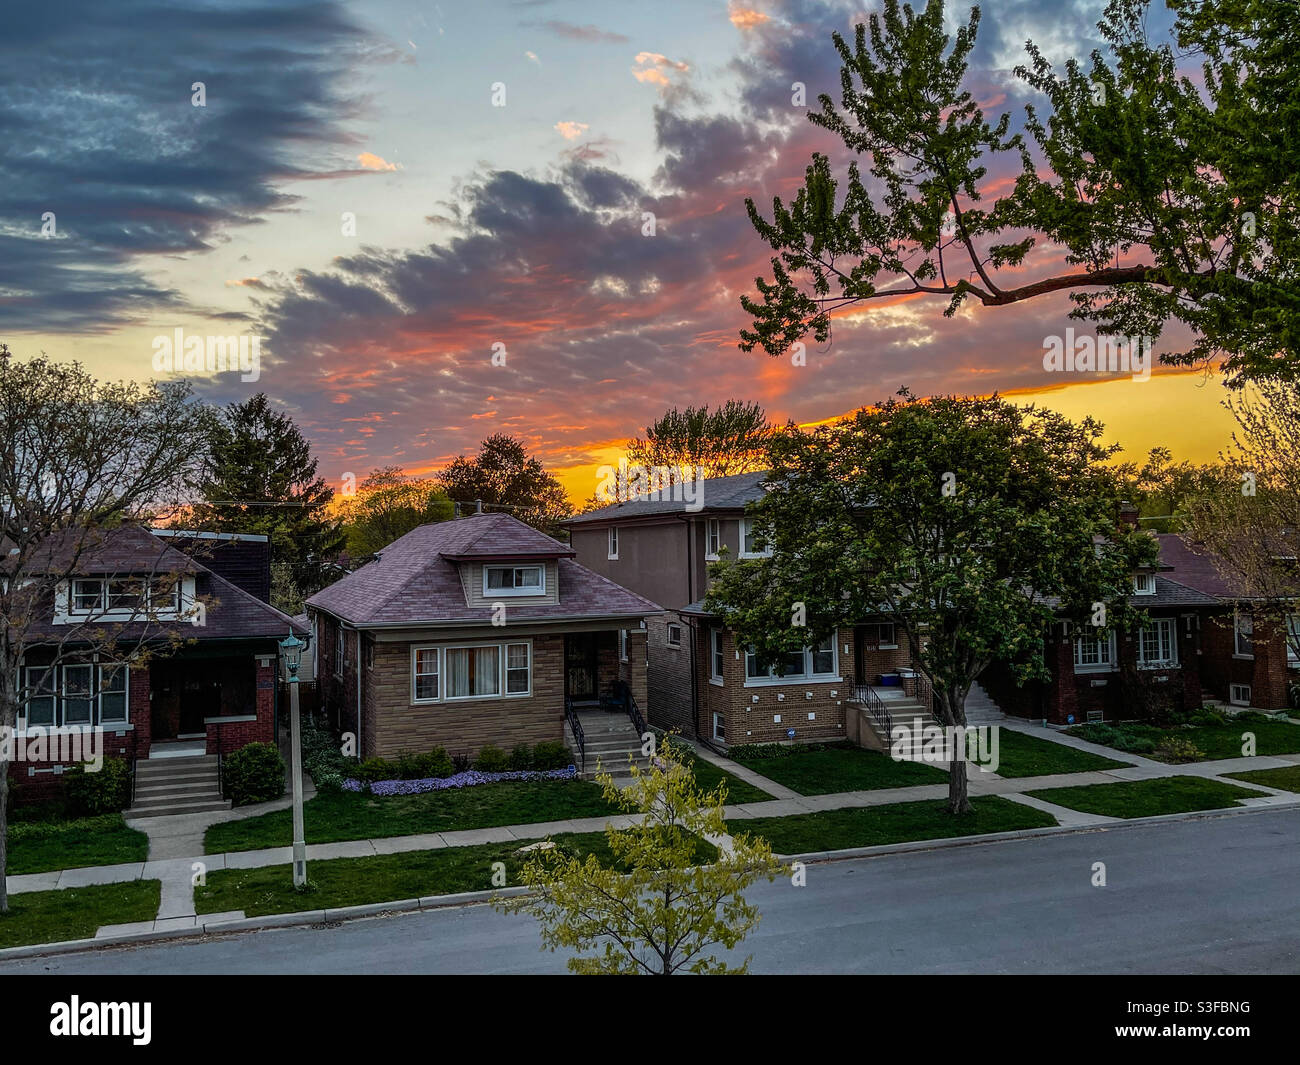 Clouds over bungalows in Oak Park, Illinois neighborhood illuminated by setting sun. Stock Photo